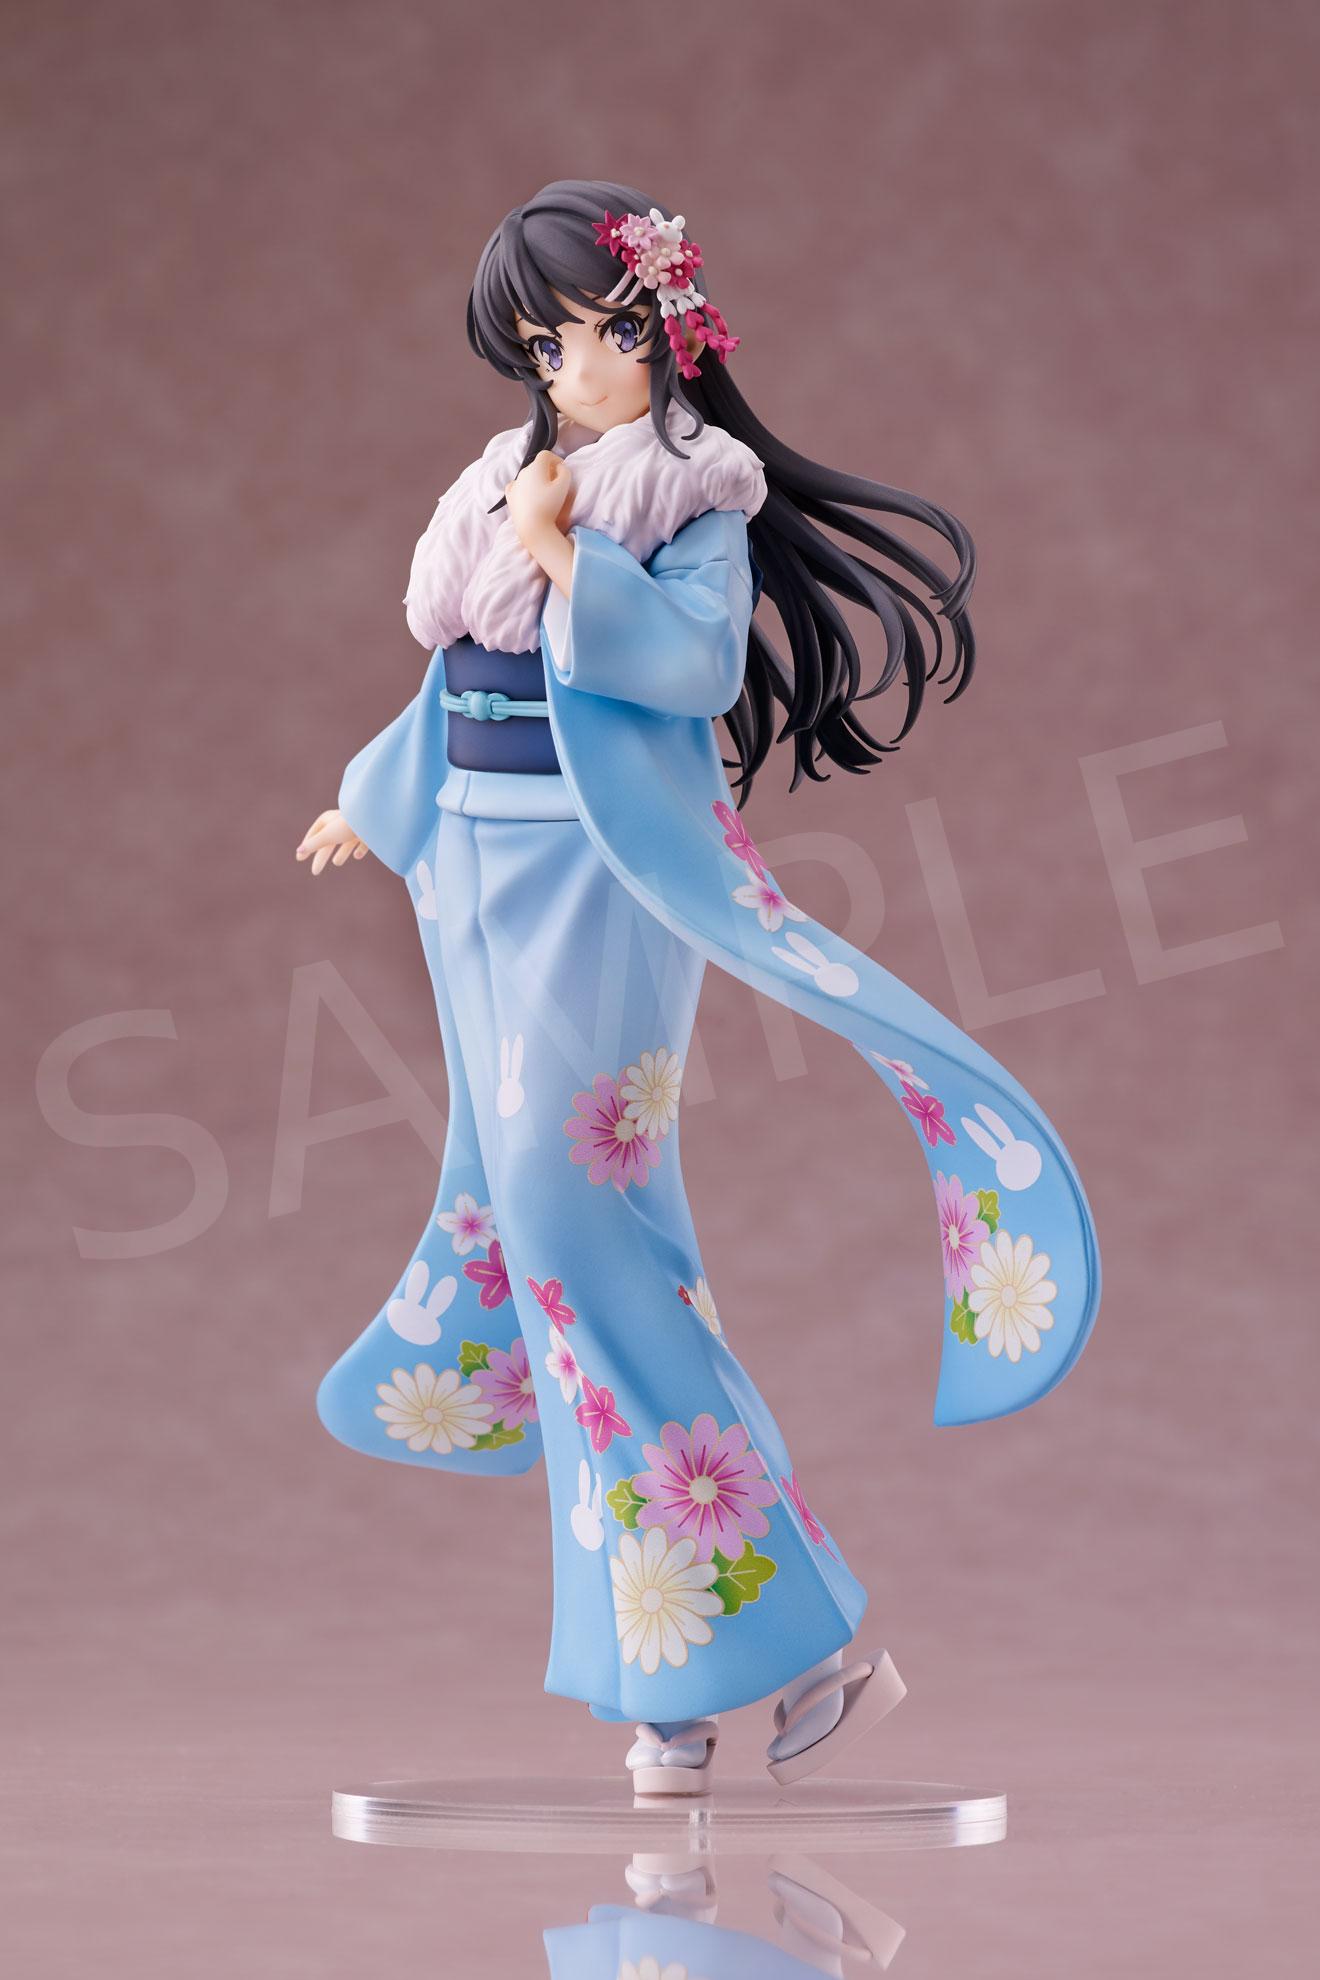 Rascal Does Not Dream of Bunny Girl Senpai Mai Sakurajima Kimono Version 1/7 Scale Figure